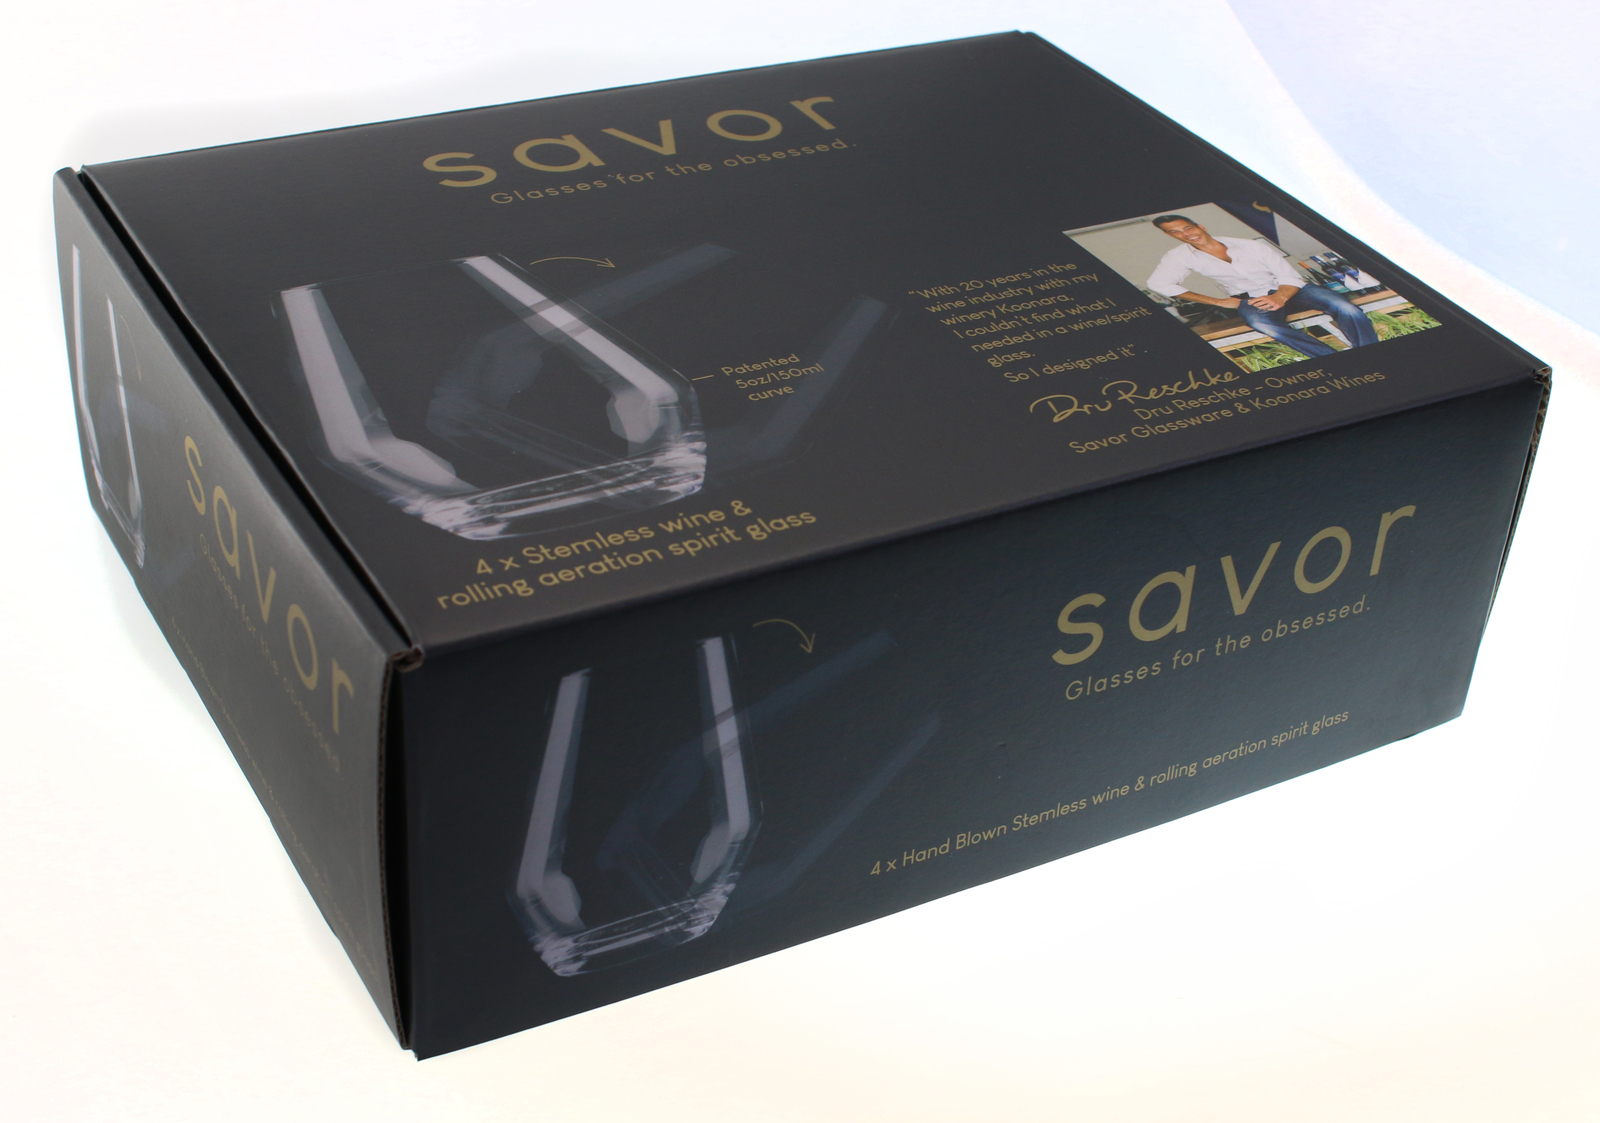 Savor Custom Design Stemless Glass Set of 4